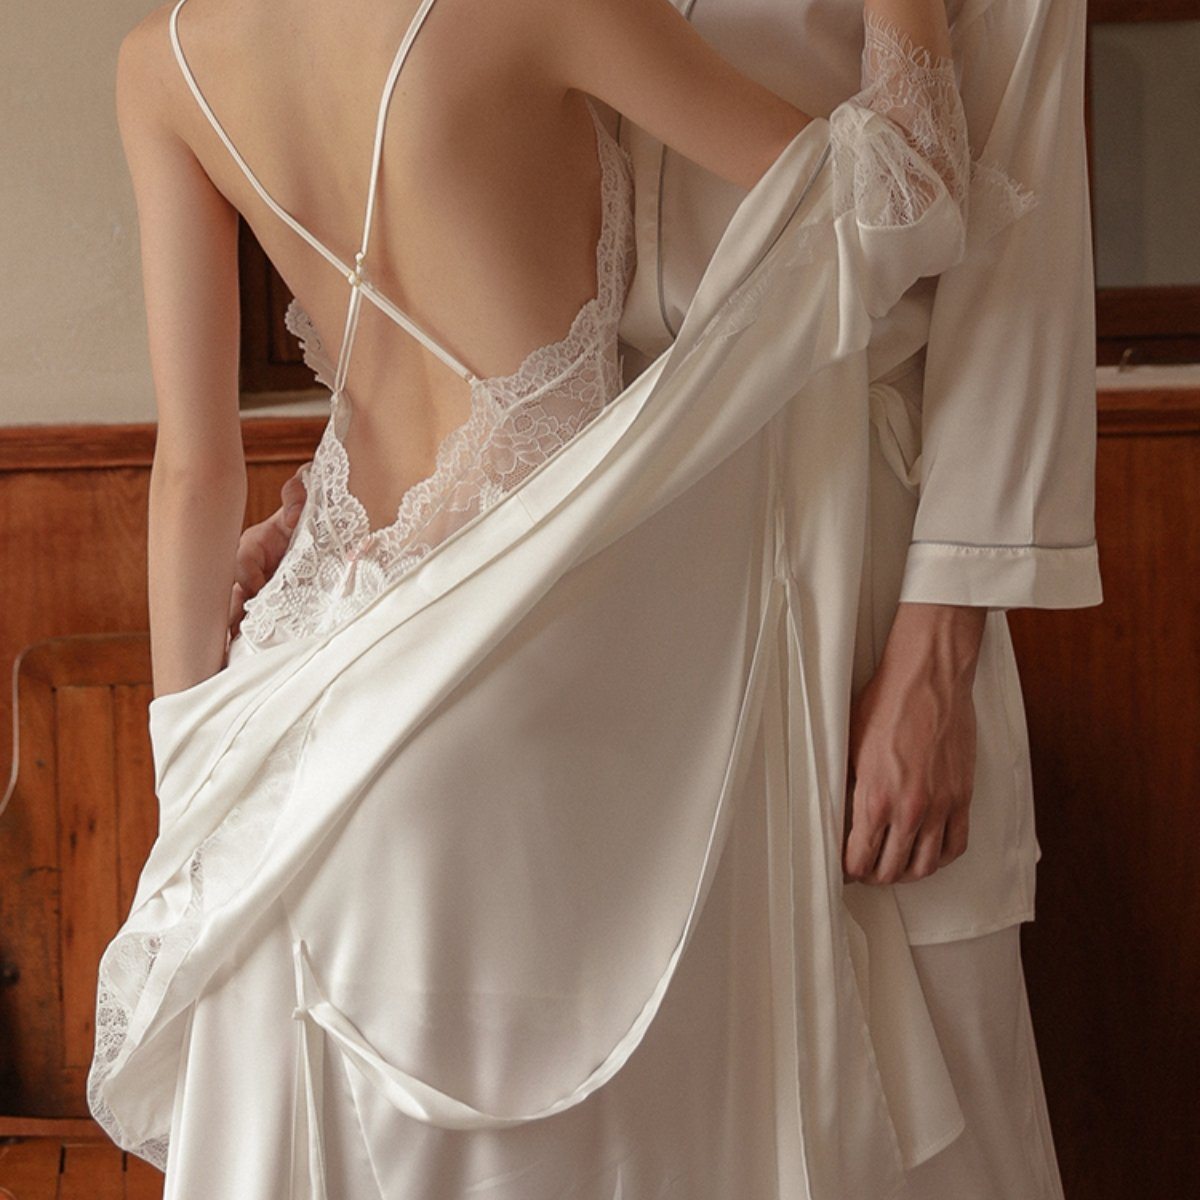 Sharlet satin robe Intimates LOVEFREYA White Free size 